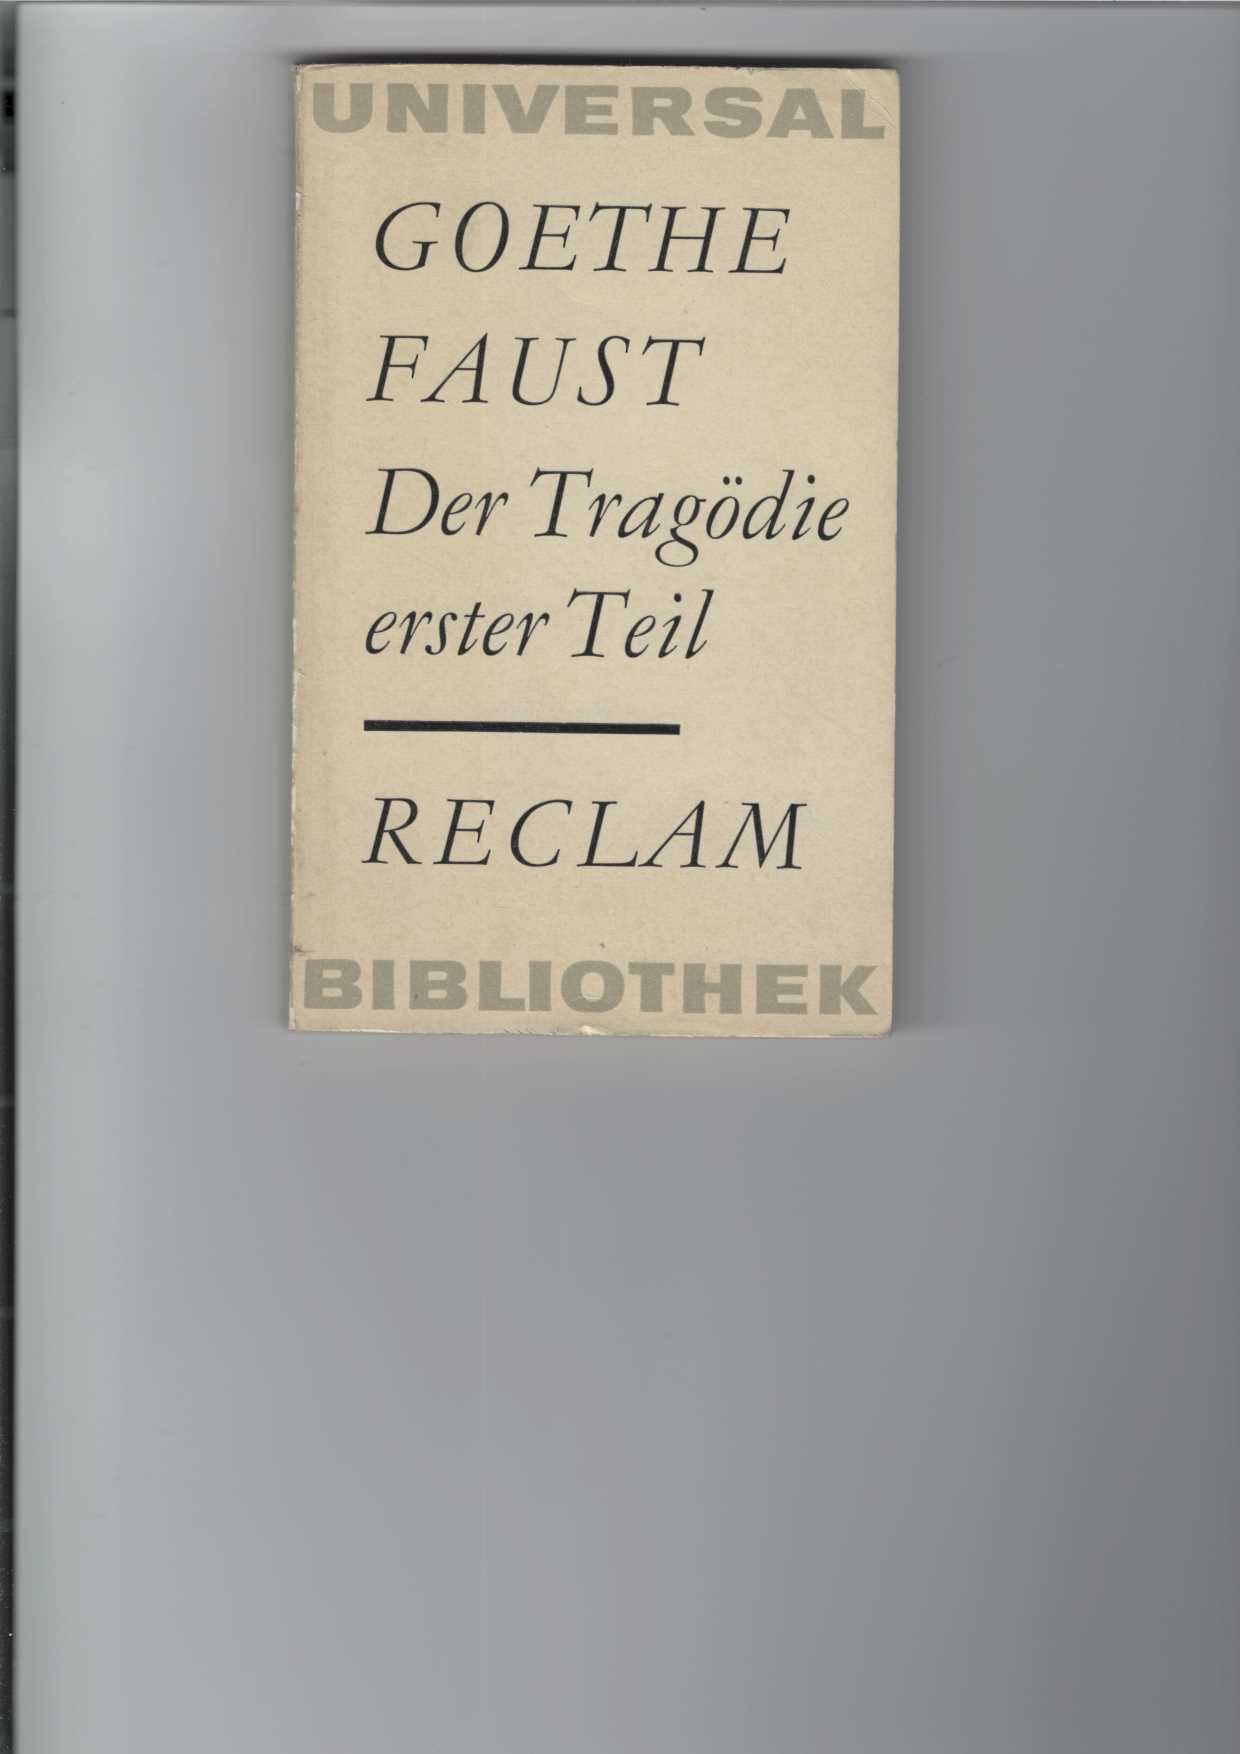 Faust : Der Tragödie erster Teil. Reclams Universal-Bibliothek Band 1. - Goethe, Johann Wolfgang von